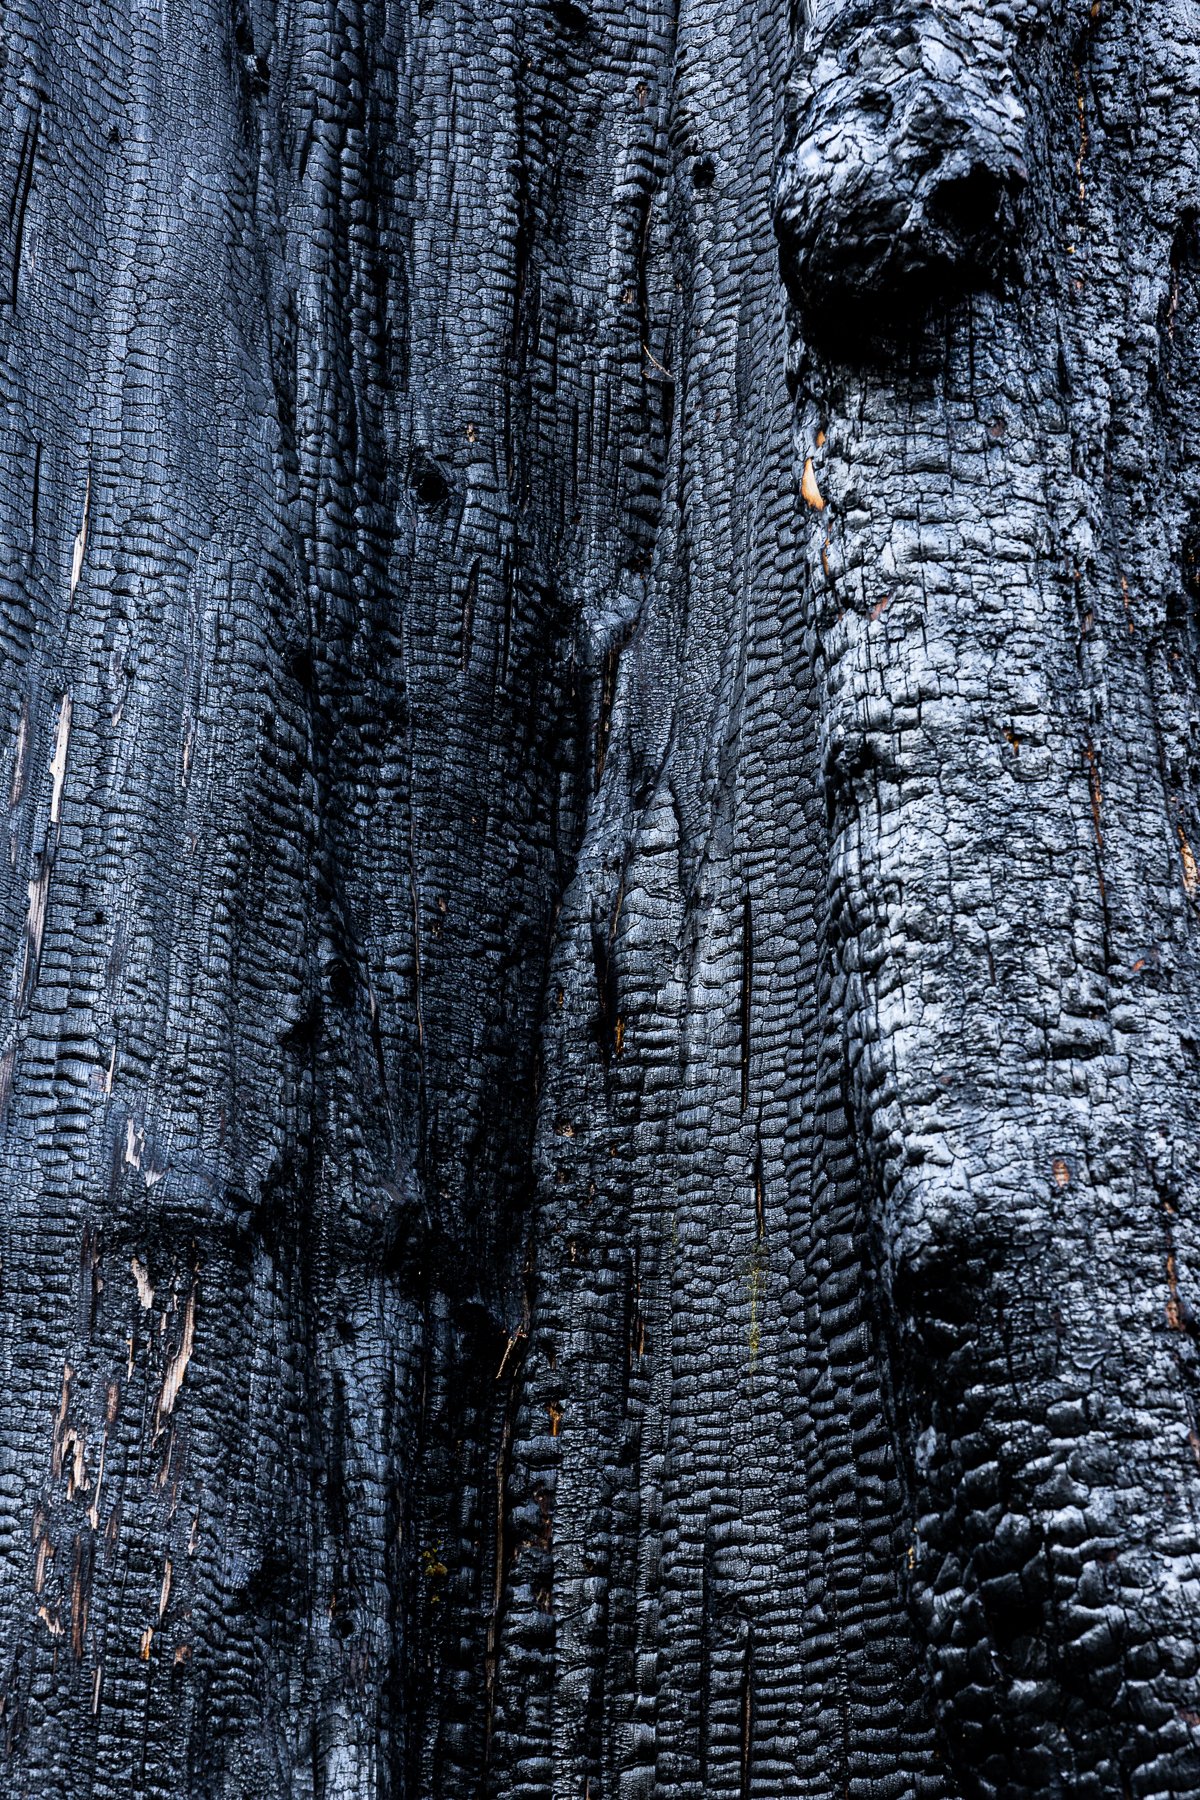 redwoods-sequoia-kings-canyon-national-park-detail-trunk-bark-burnt-fire-black-charcoal-coal-forest.jpg